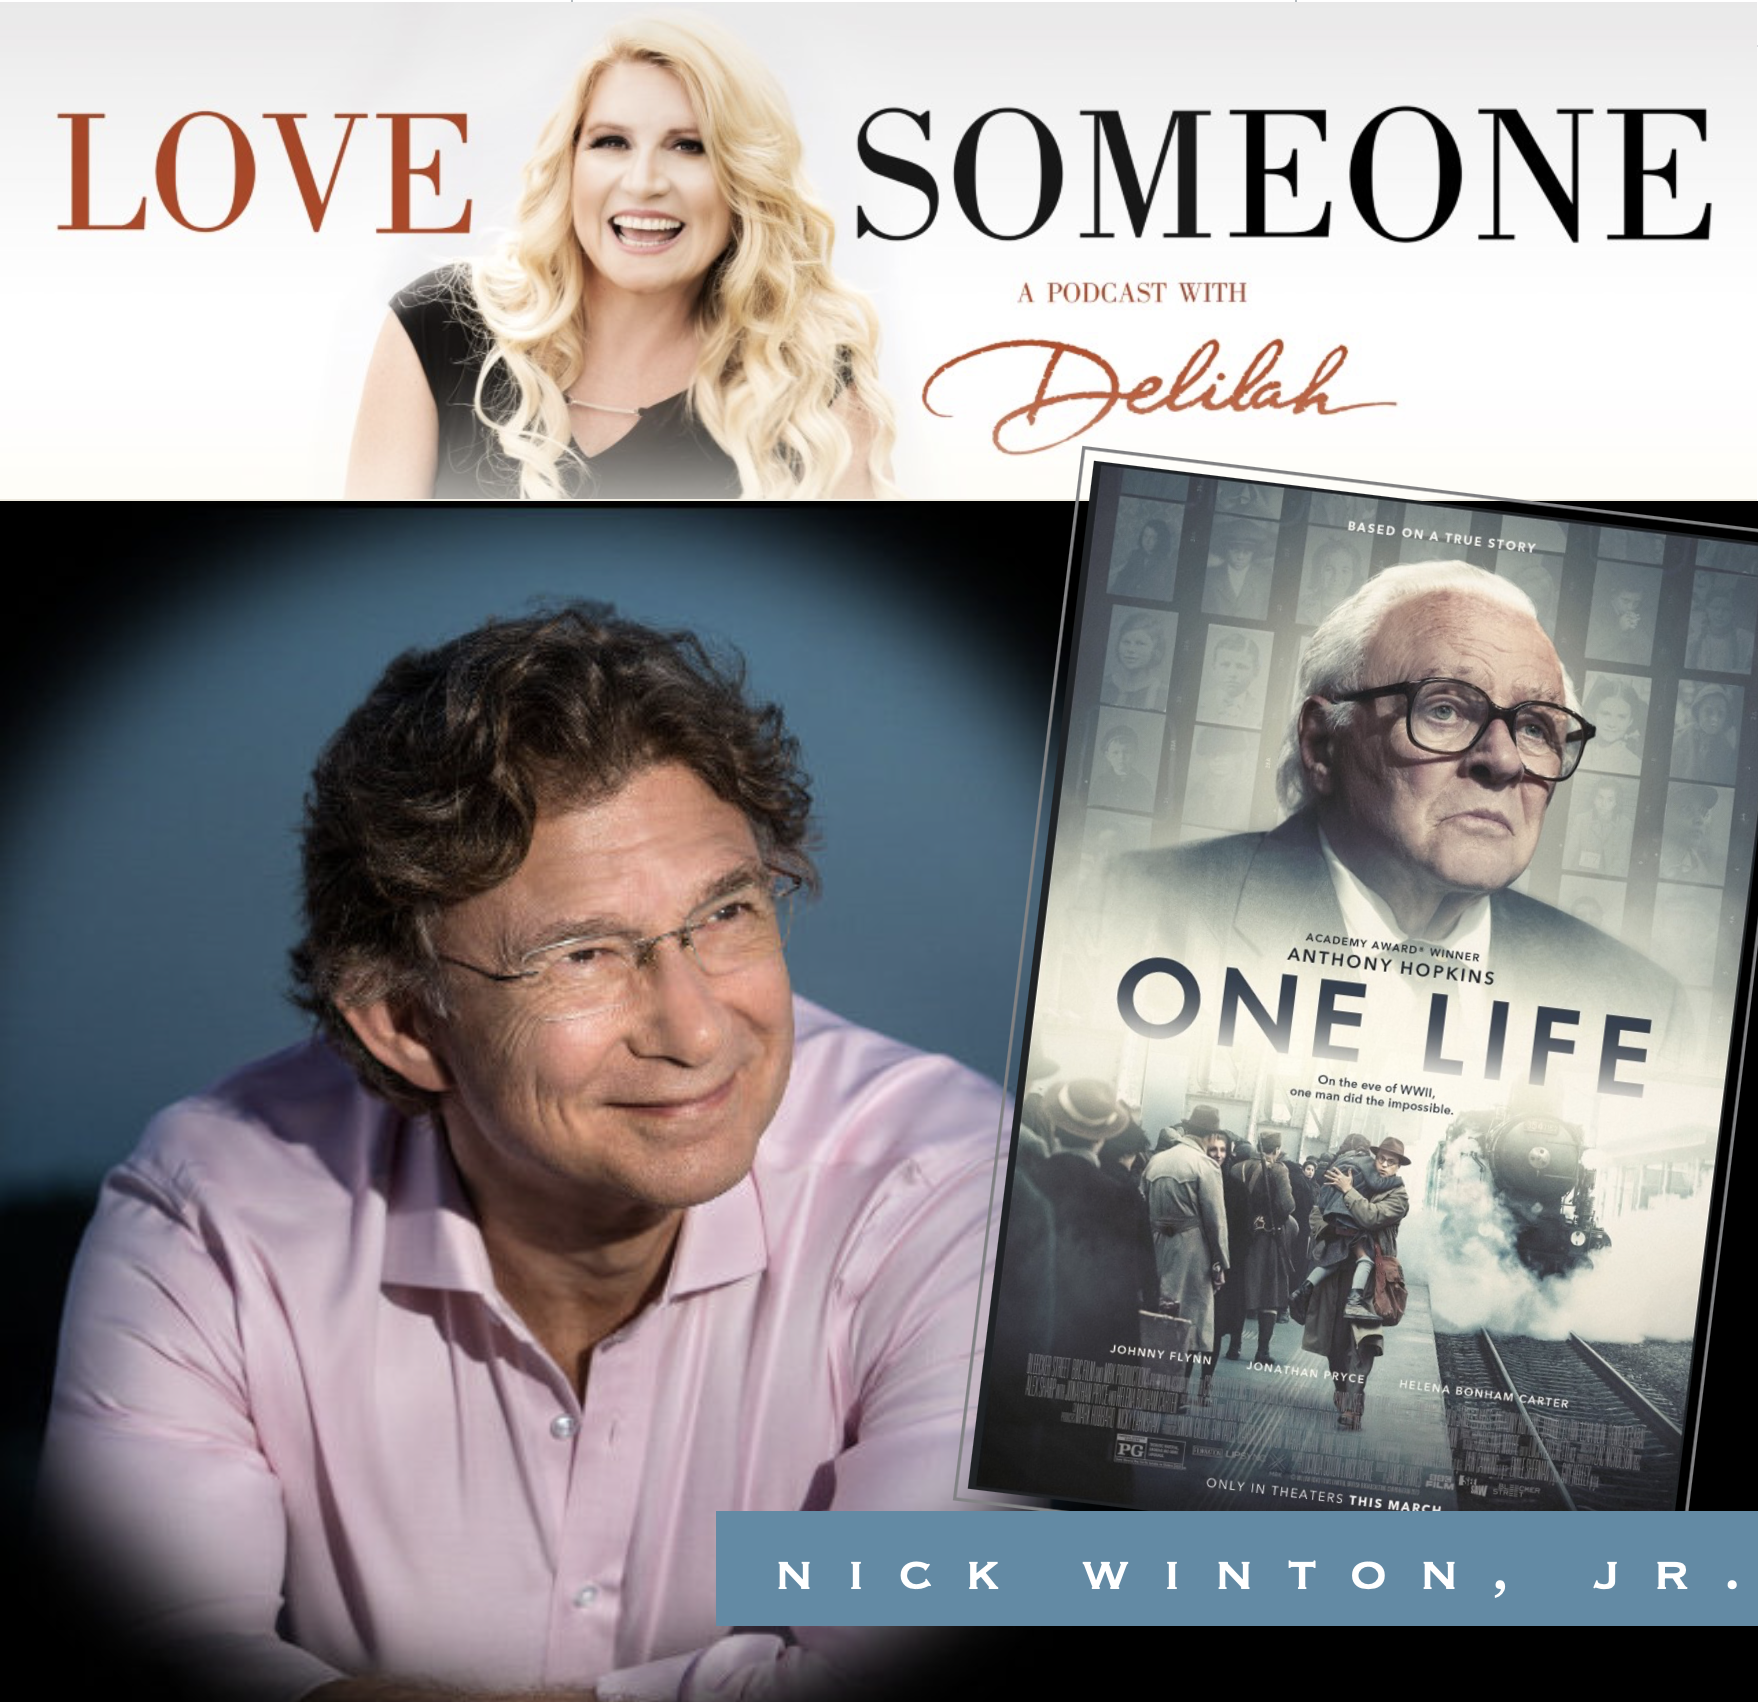 NICK WINTON, JR.: "One Life"